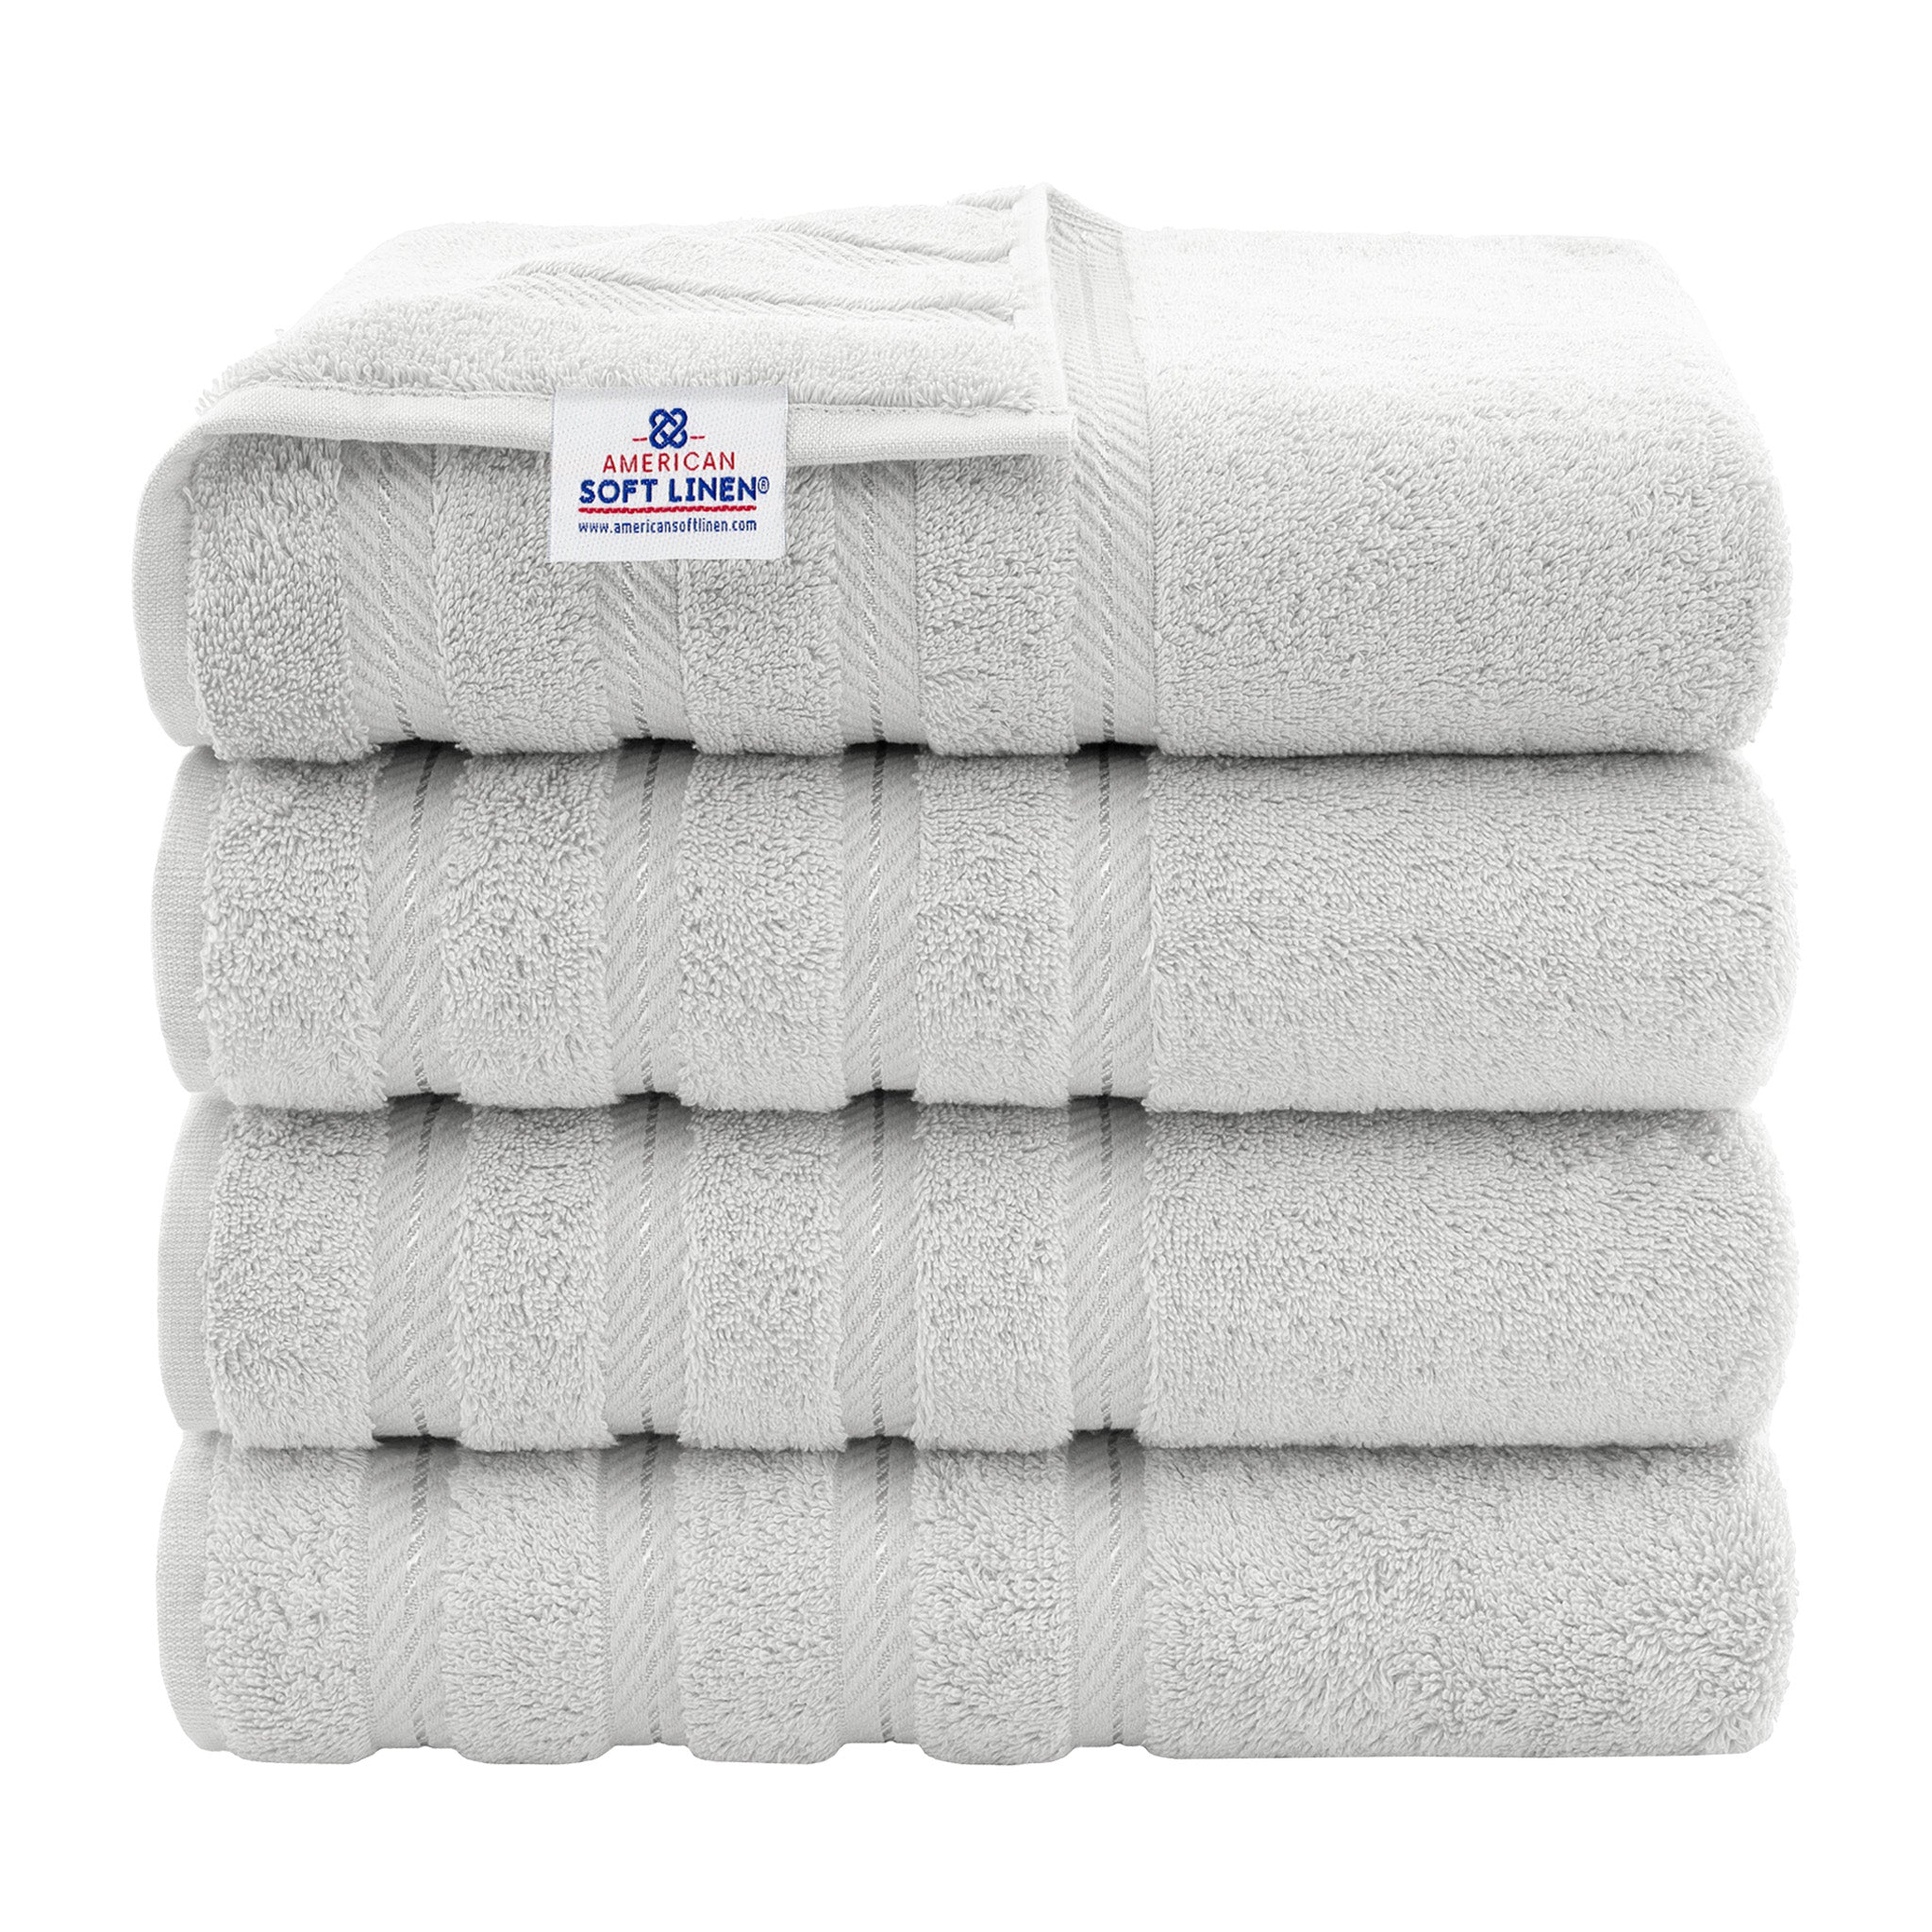 American Soft Linen 100% Turkish Cotton 4 Pack Bath Towel Set Wholesale silver-gray-1